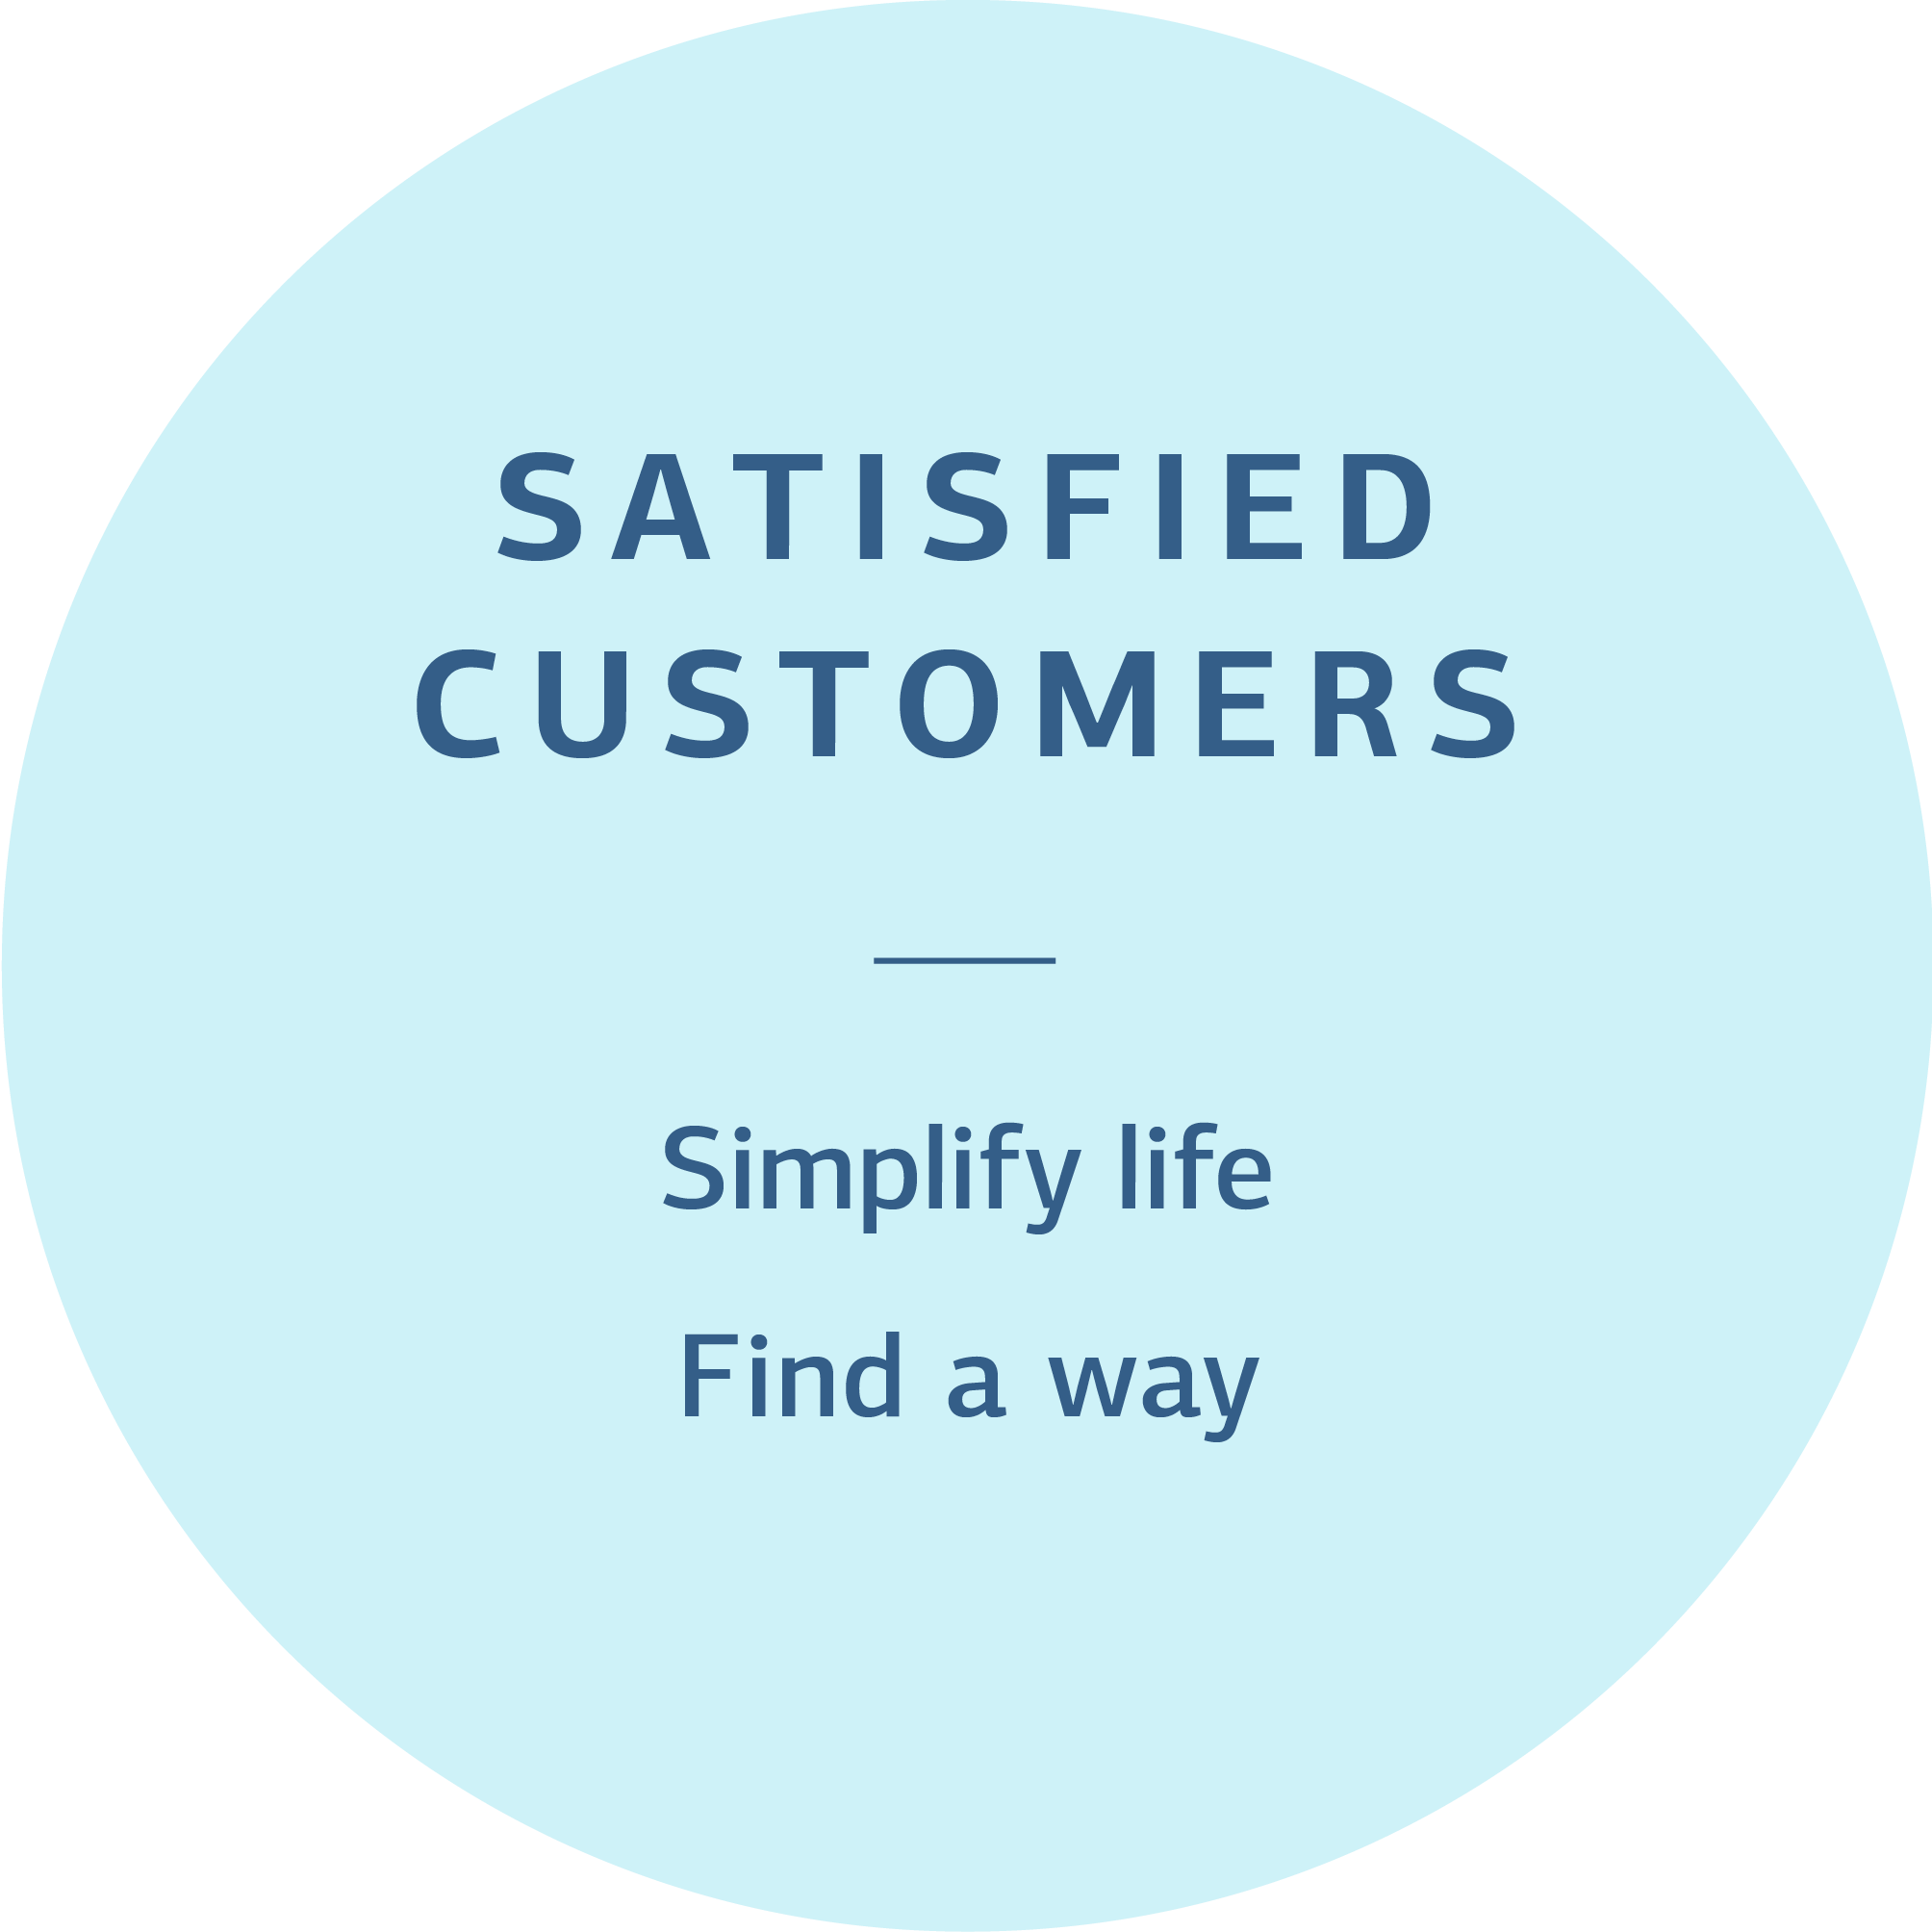 Pillar 1: Satisfied customers